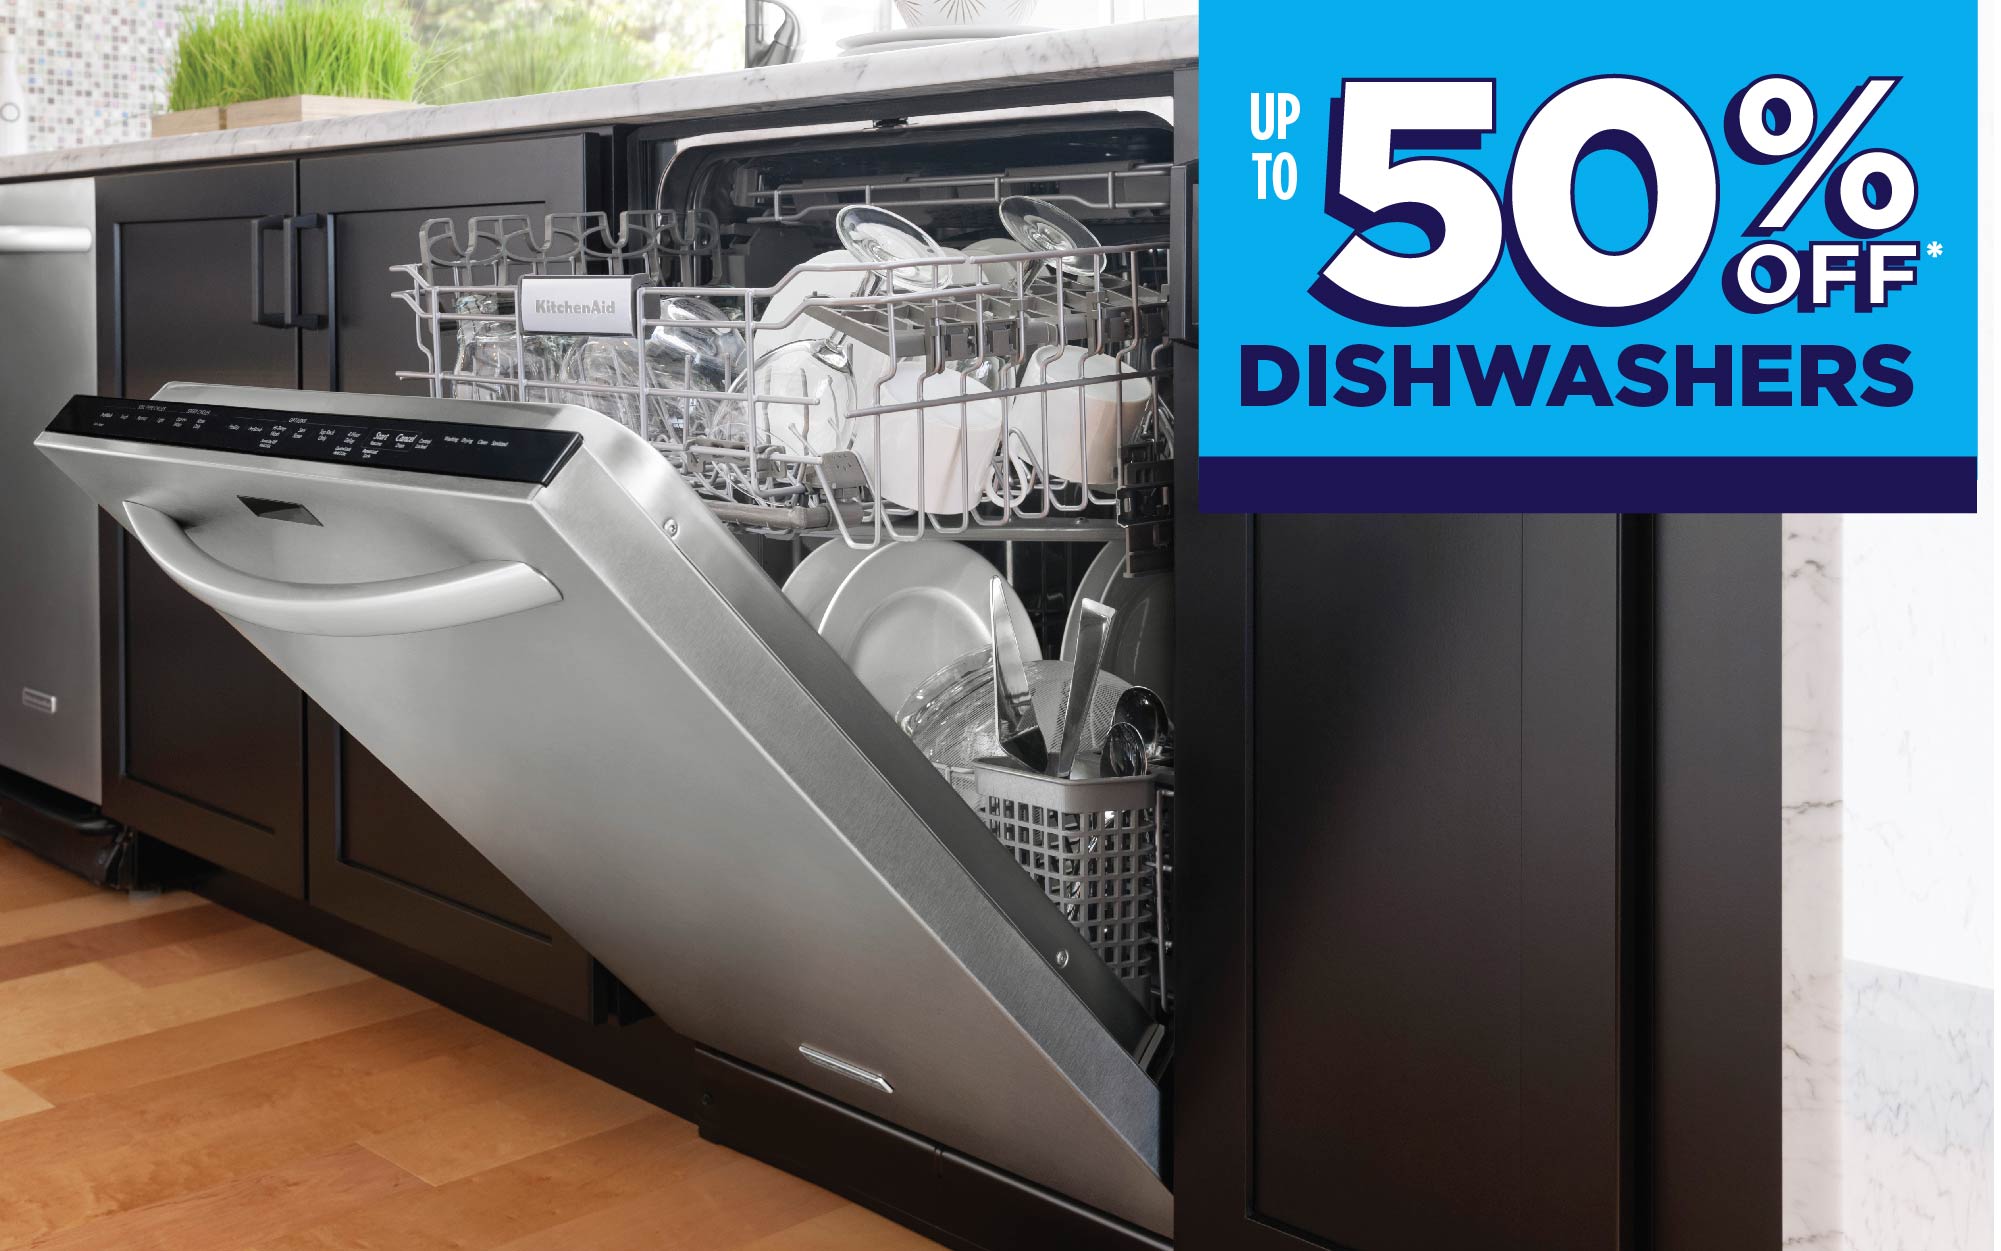 up to 50% Off Dishwashers!